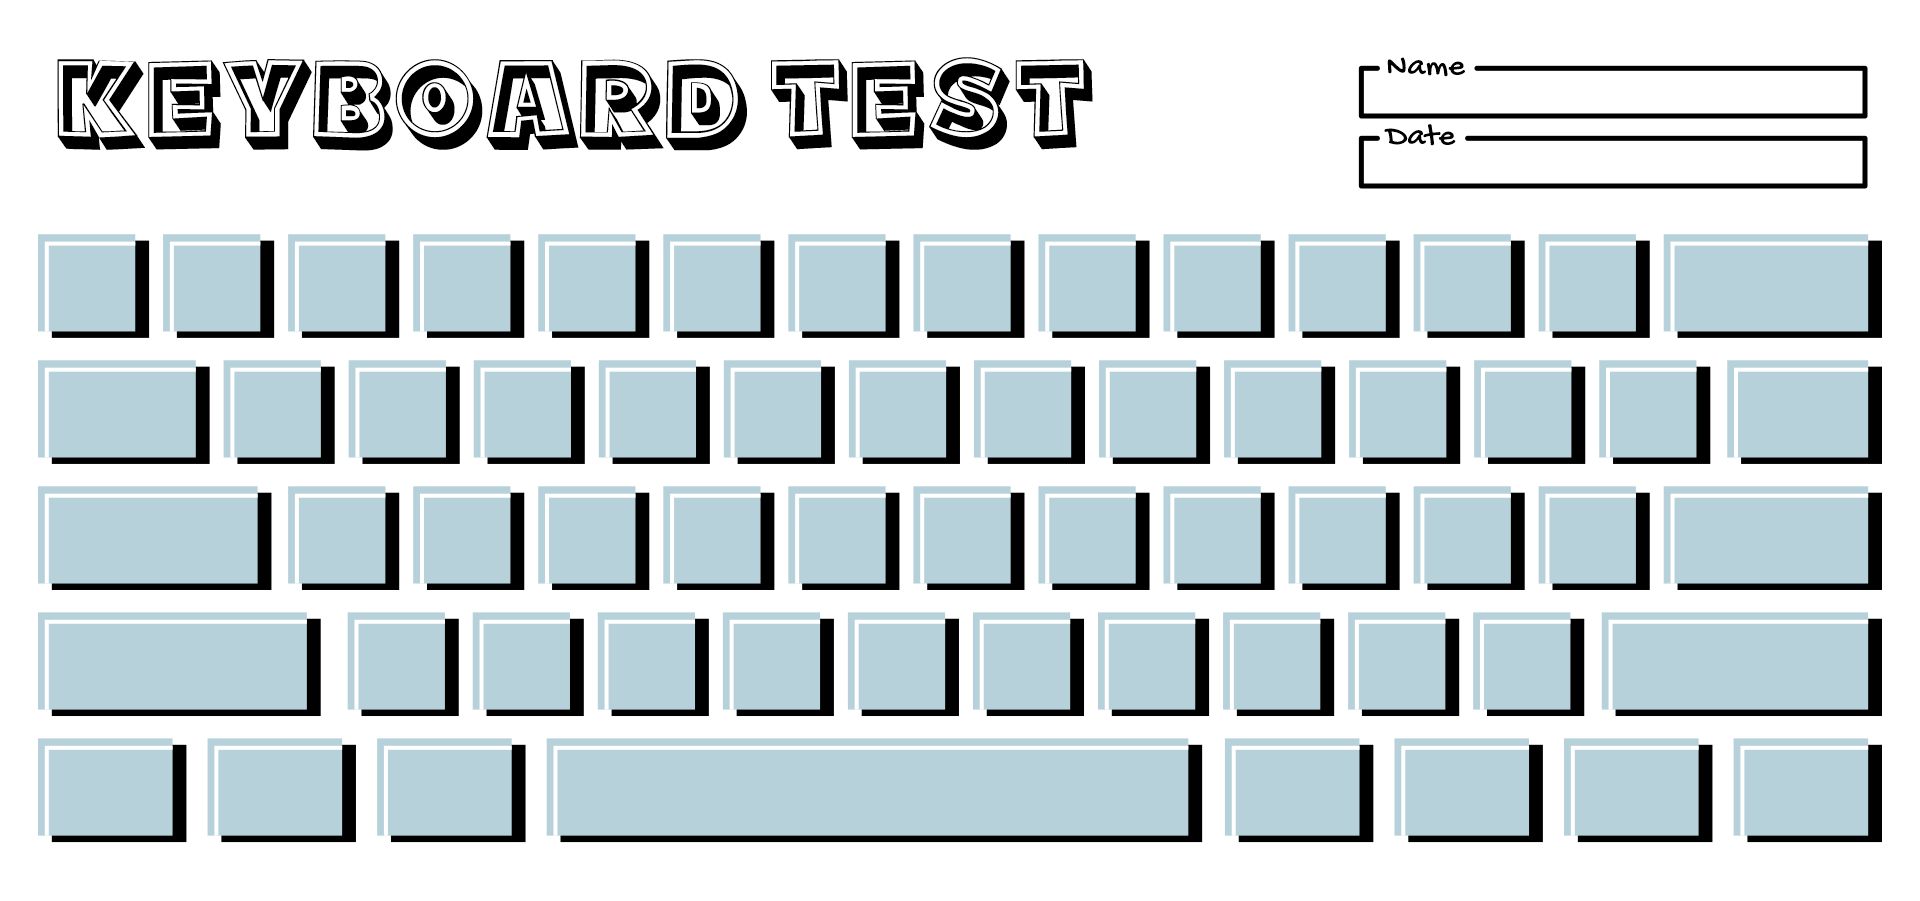 Blank Keyboard Test Image